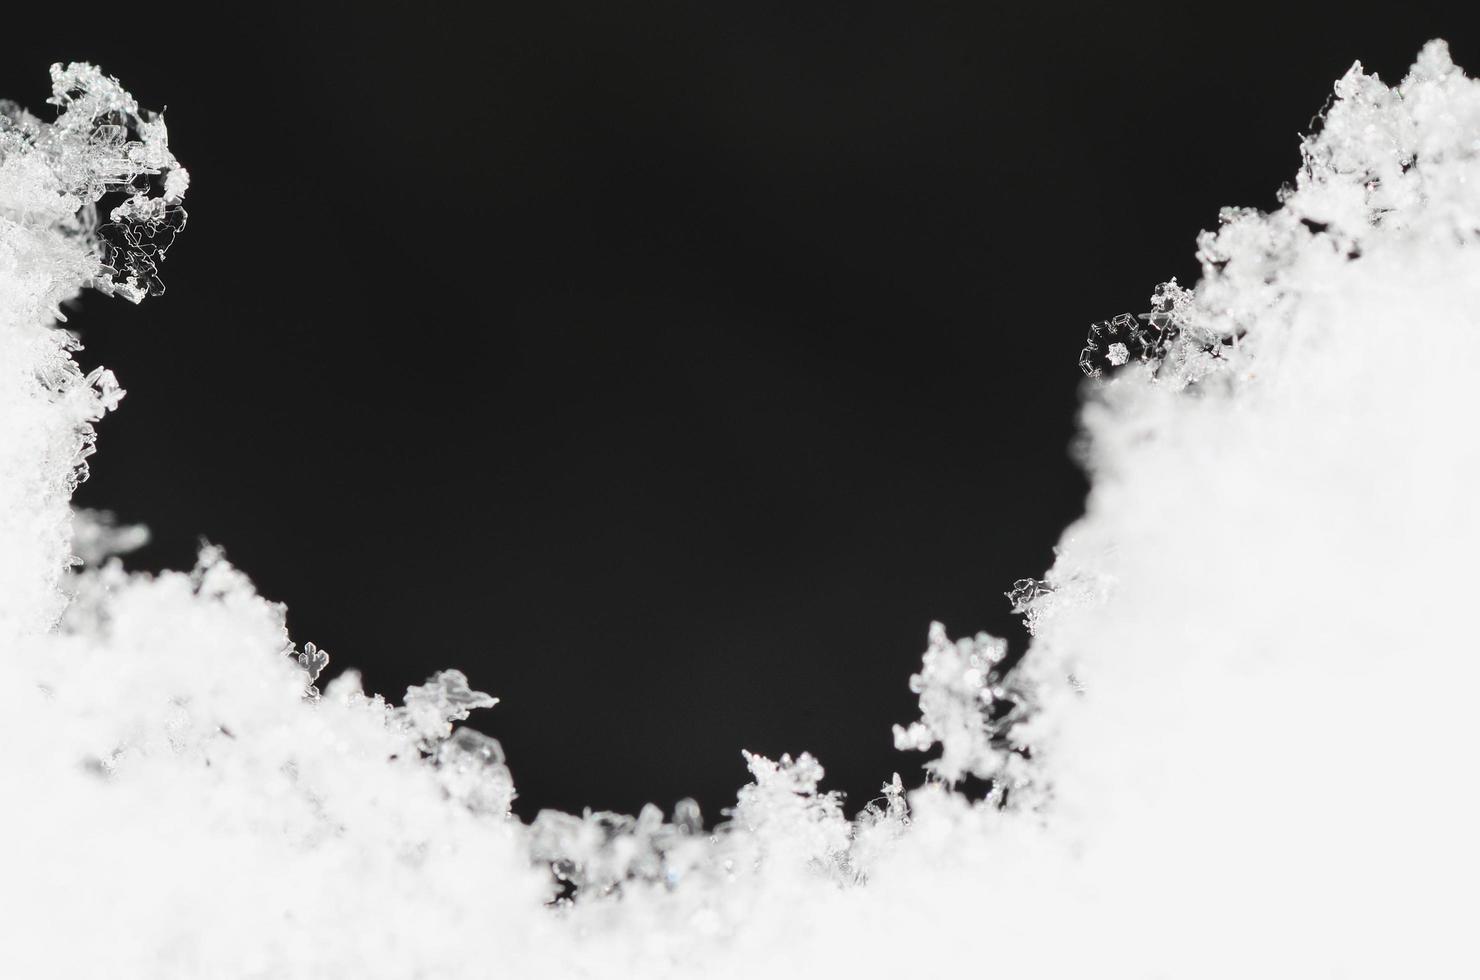 snow and dark background photo